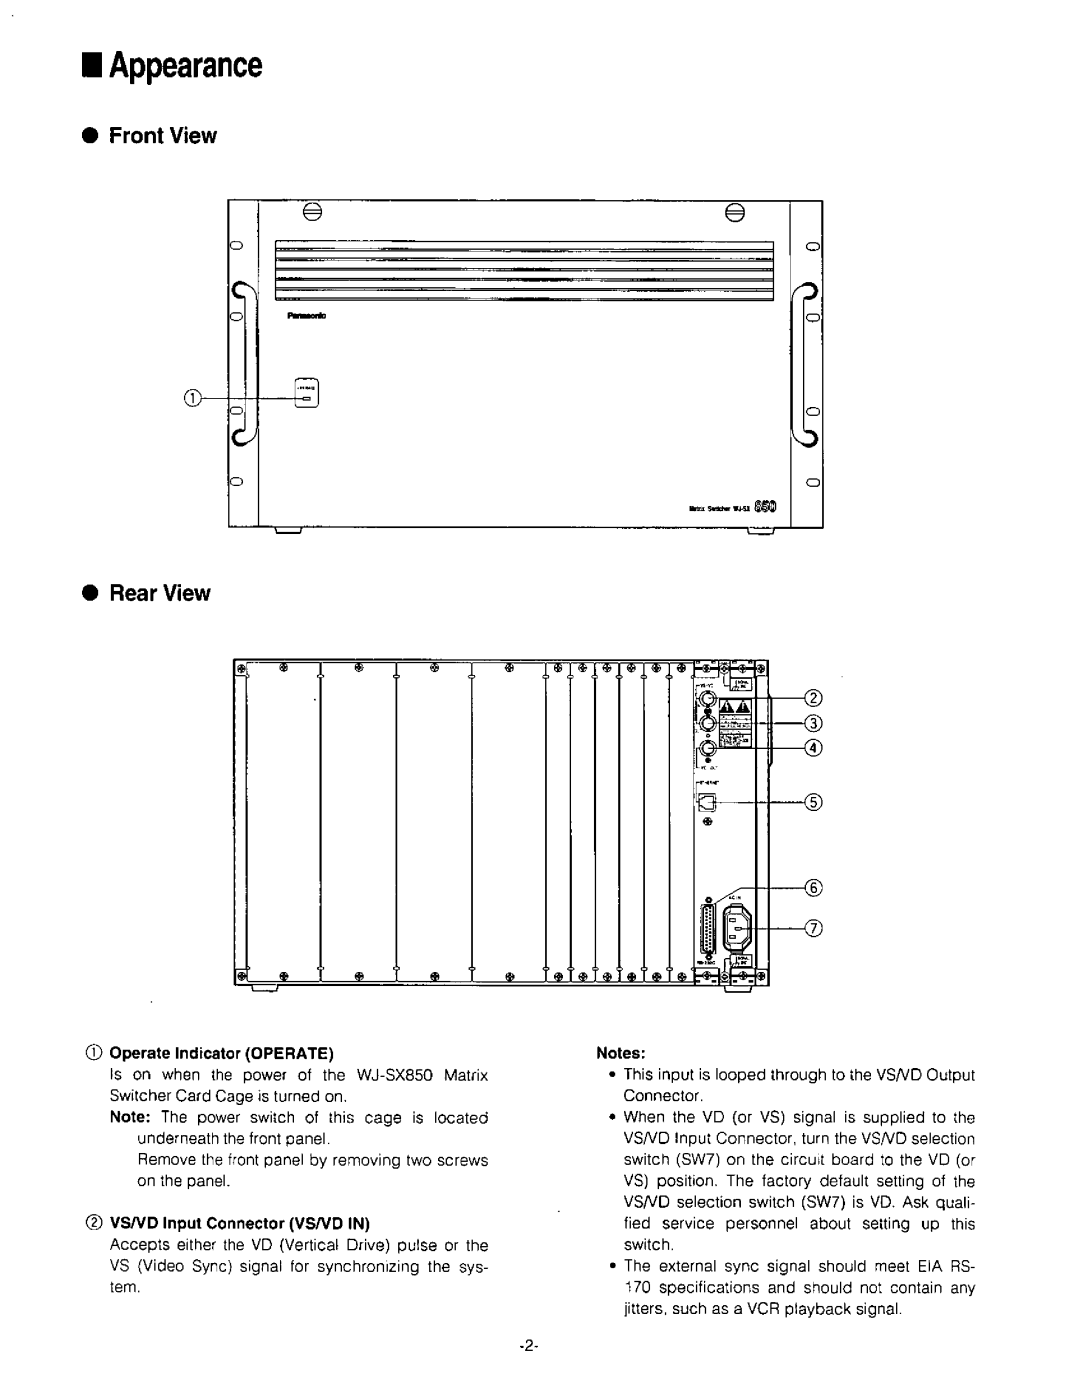 Panasonic WJ-SX850 manual 